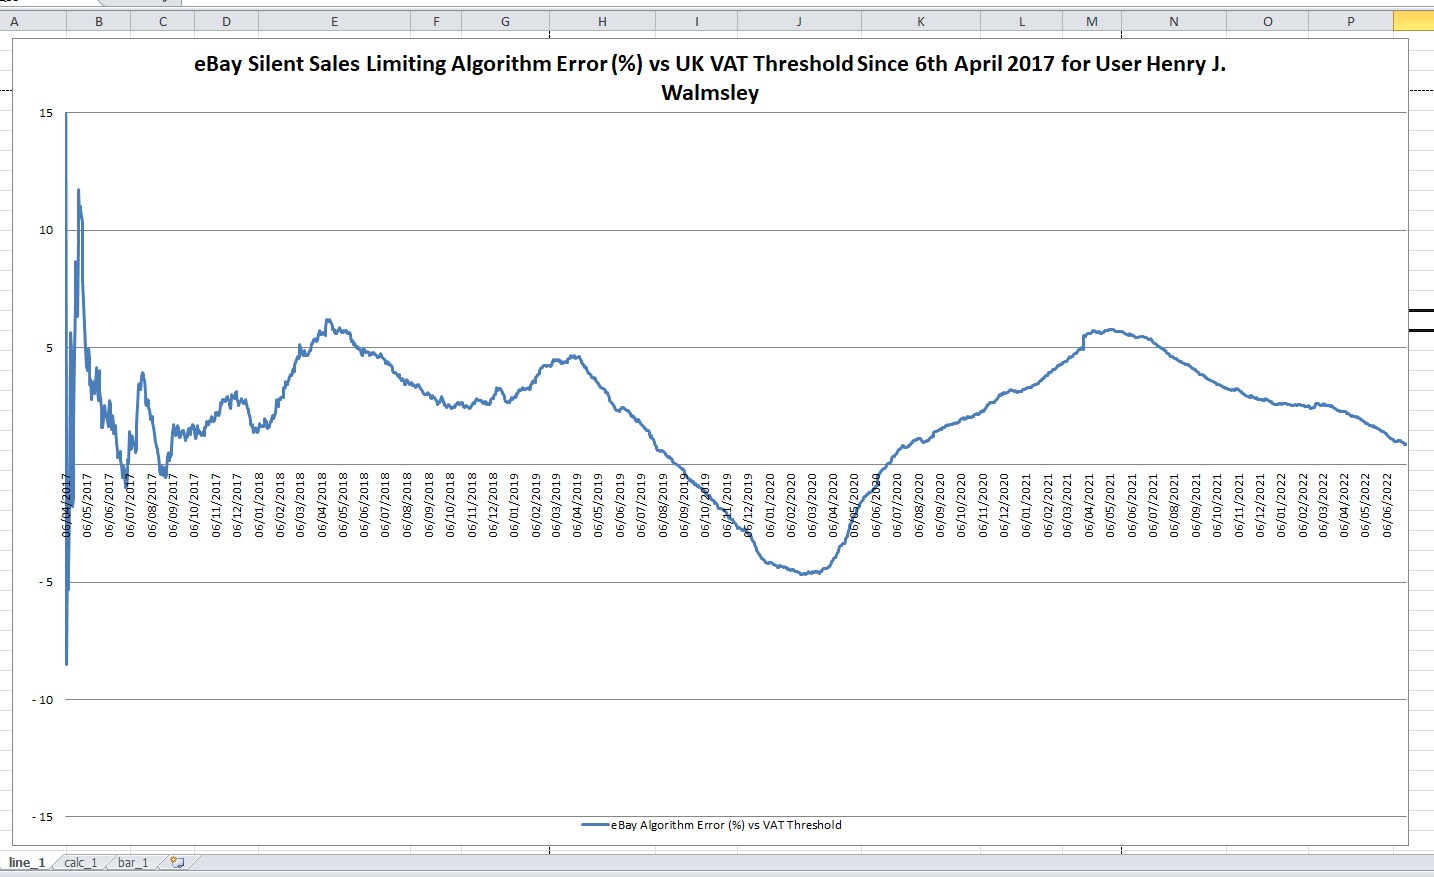 eBay Silent Sales Limiting
                                        Algorithm Error (%) vs. UK
                                        V.A.T. Threshold Since 6th April
                                        2017 for user Henry J. Walmsley